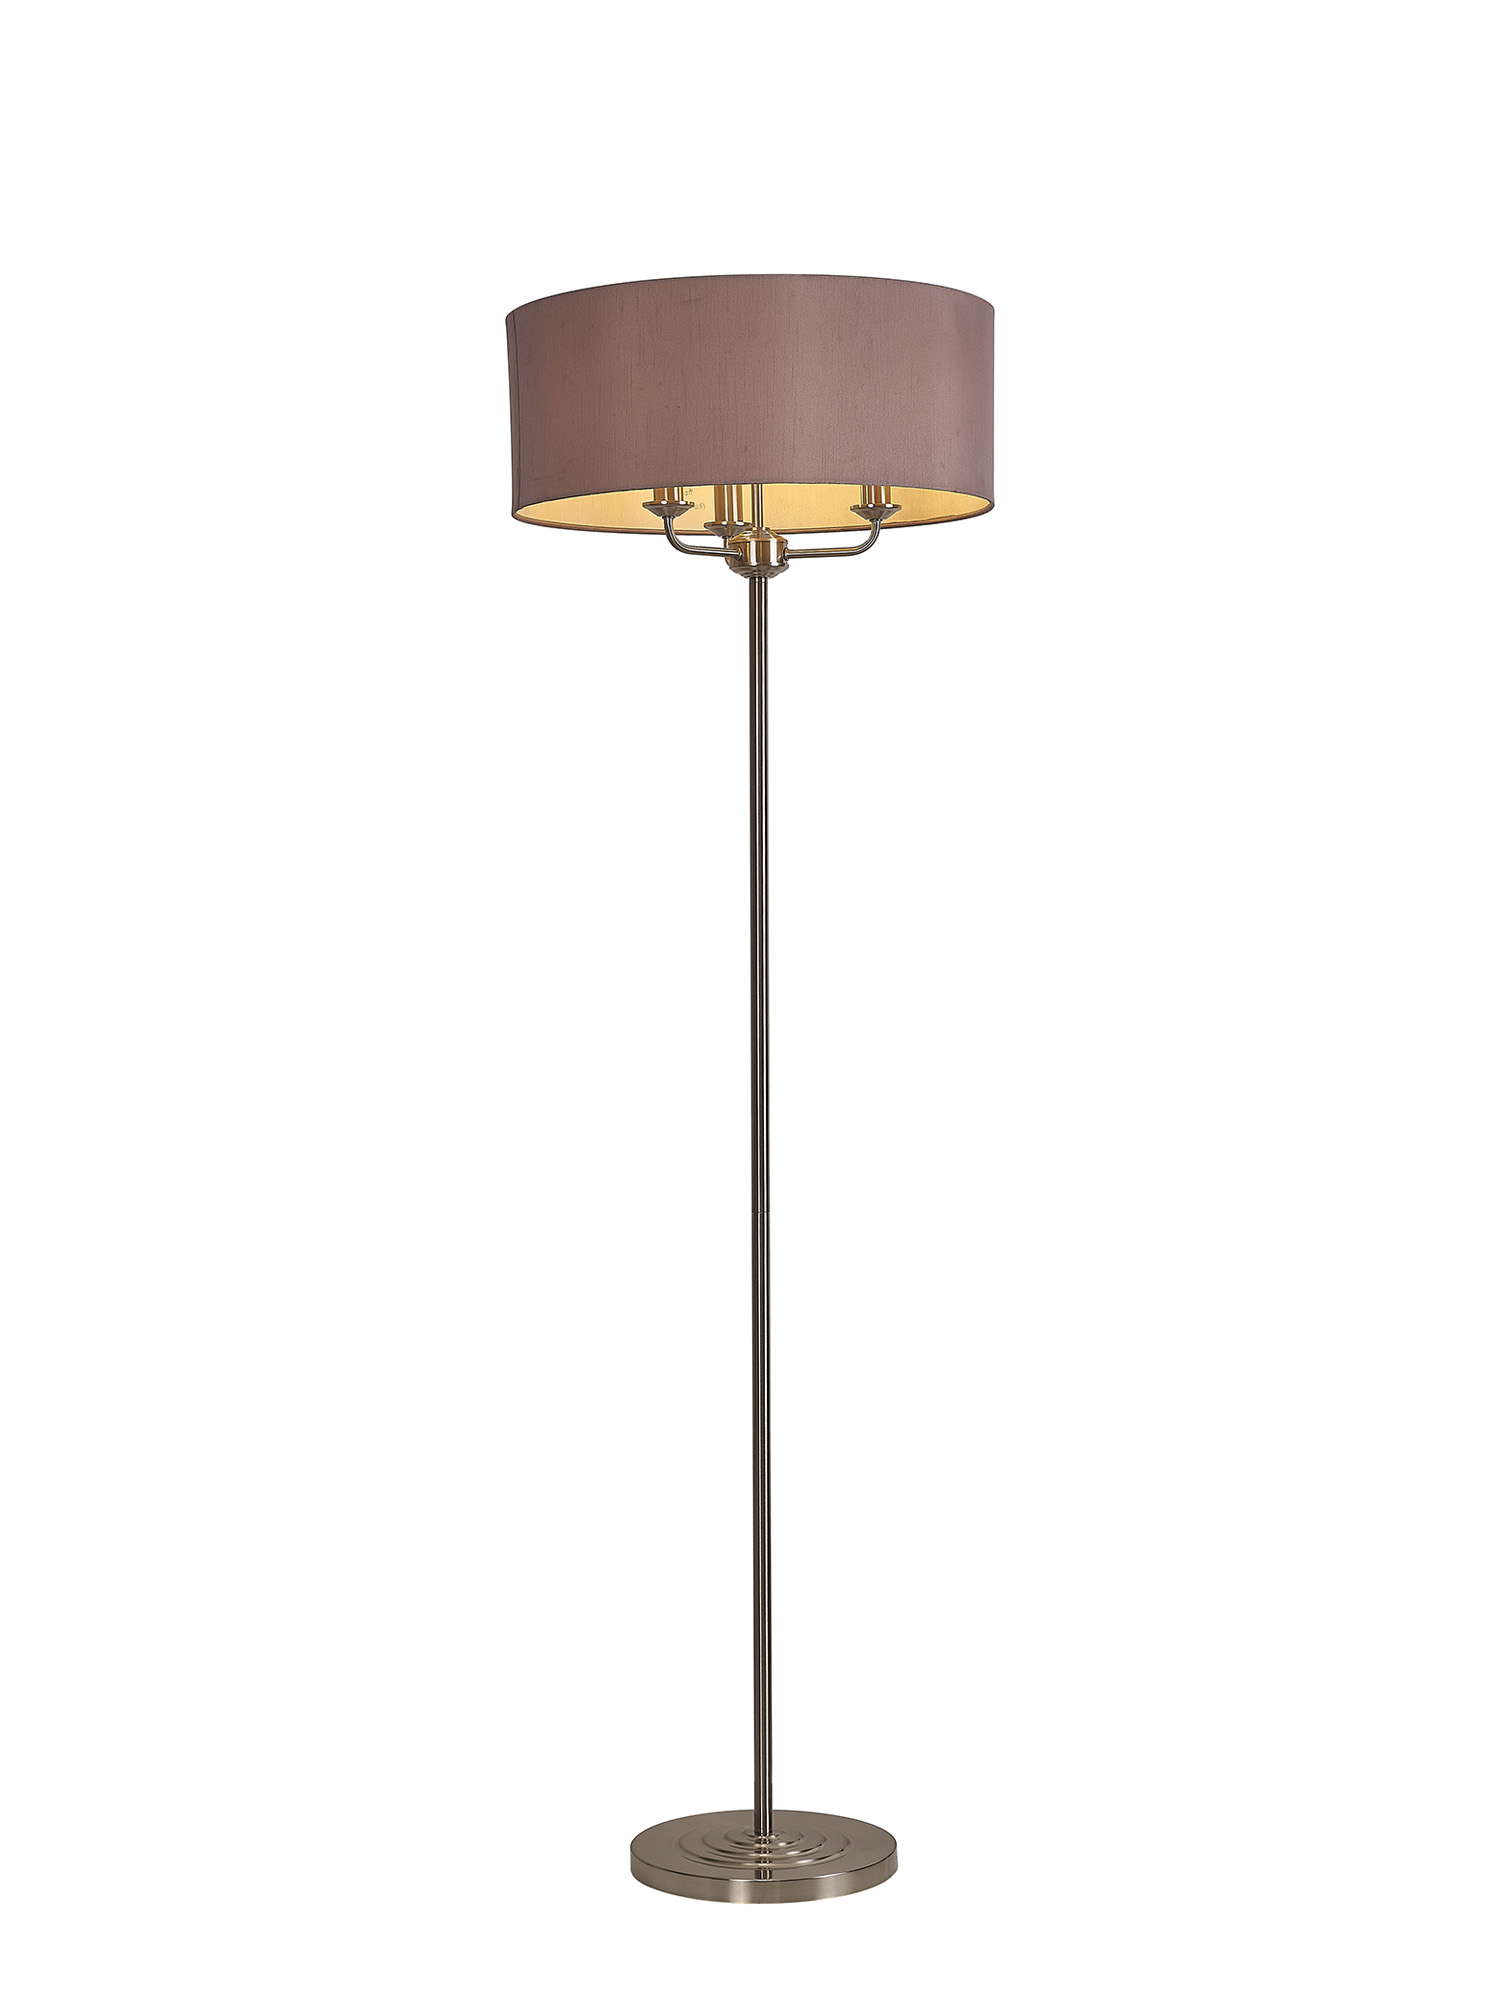 DK0938  Banyan 45cm 3 Light Floor Lamp Satin Nickel, Taupe